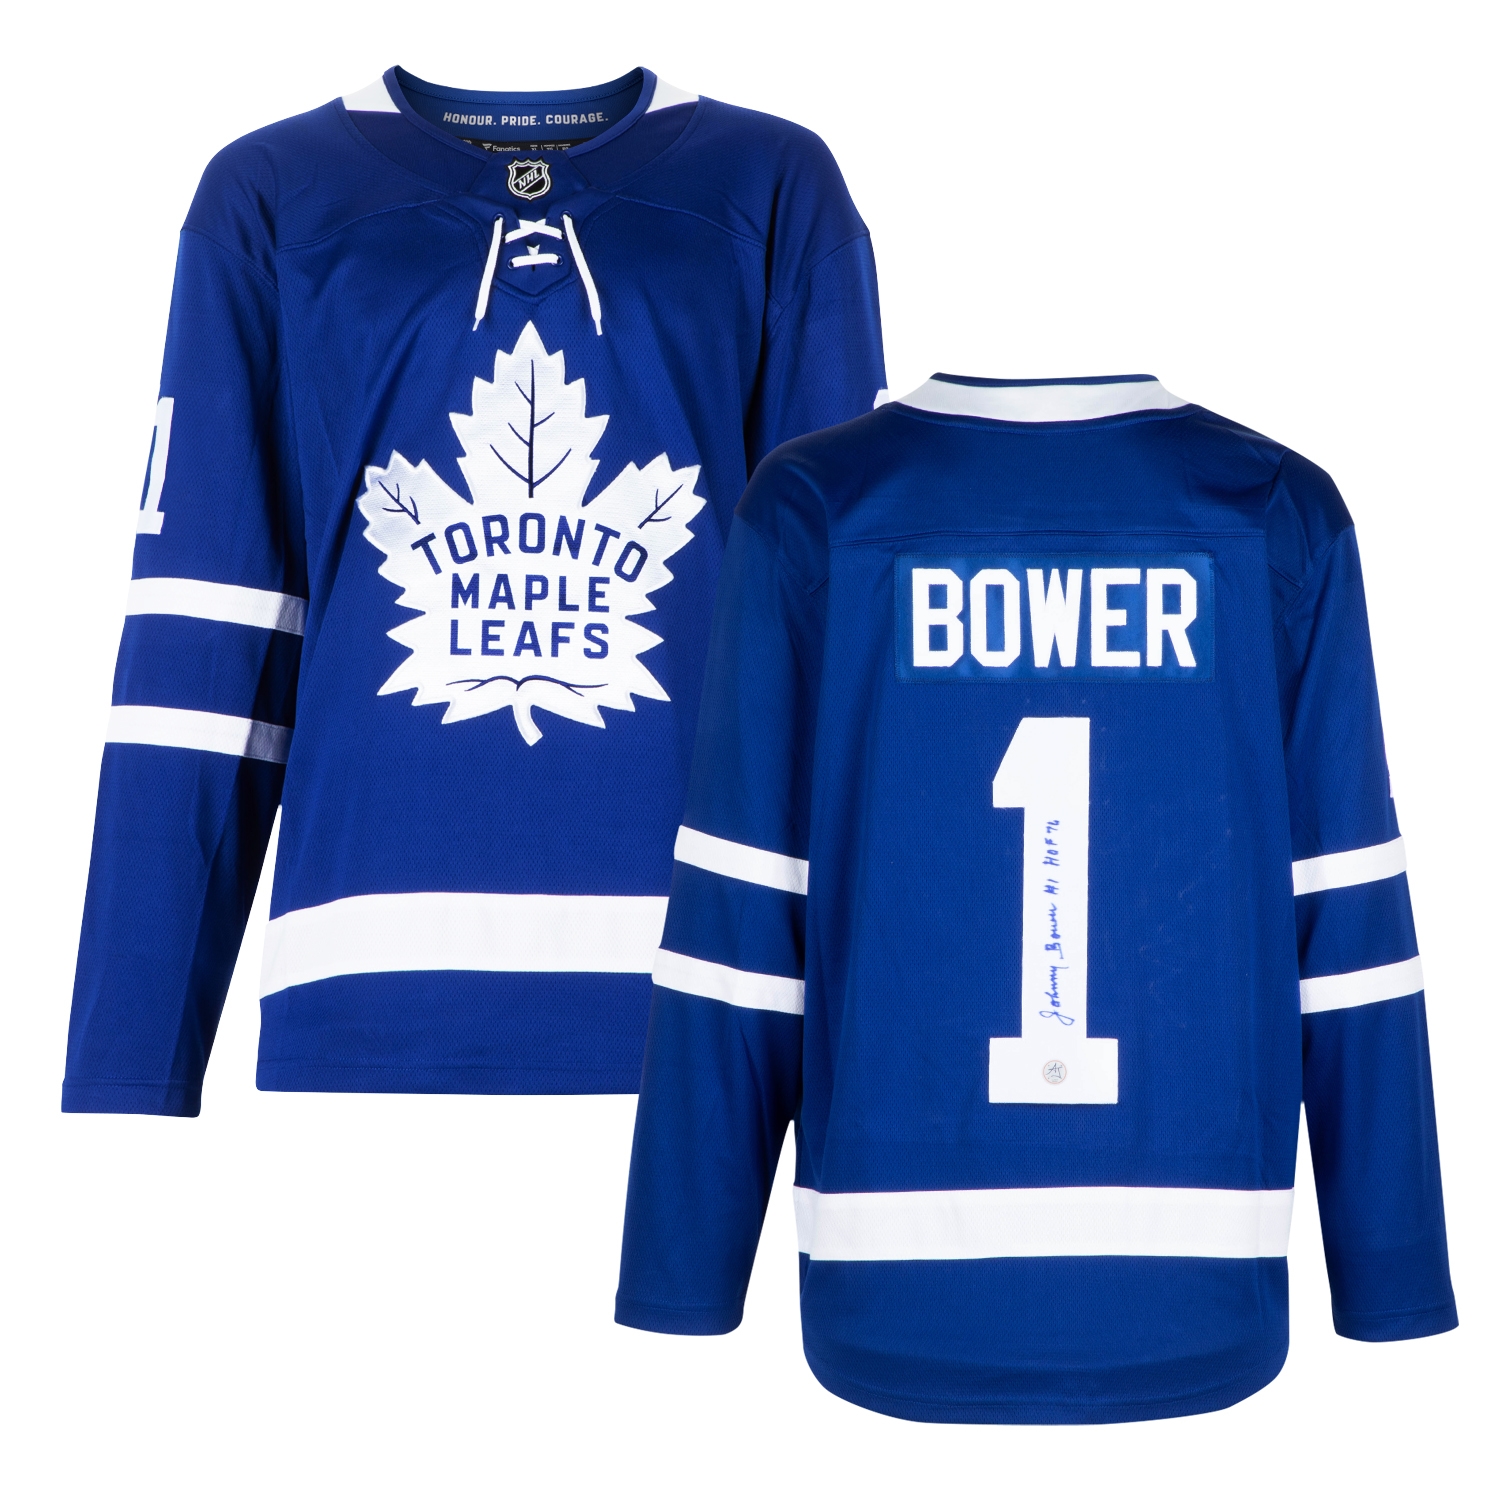 Johnny Bower Toronto Maple Leafs Autographed Fanatics Jersey